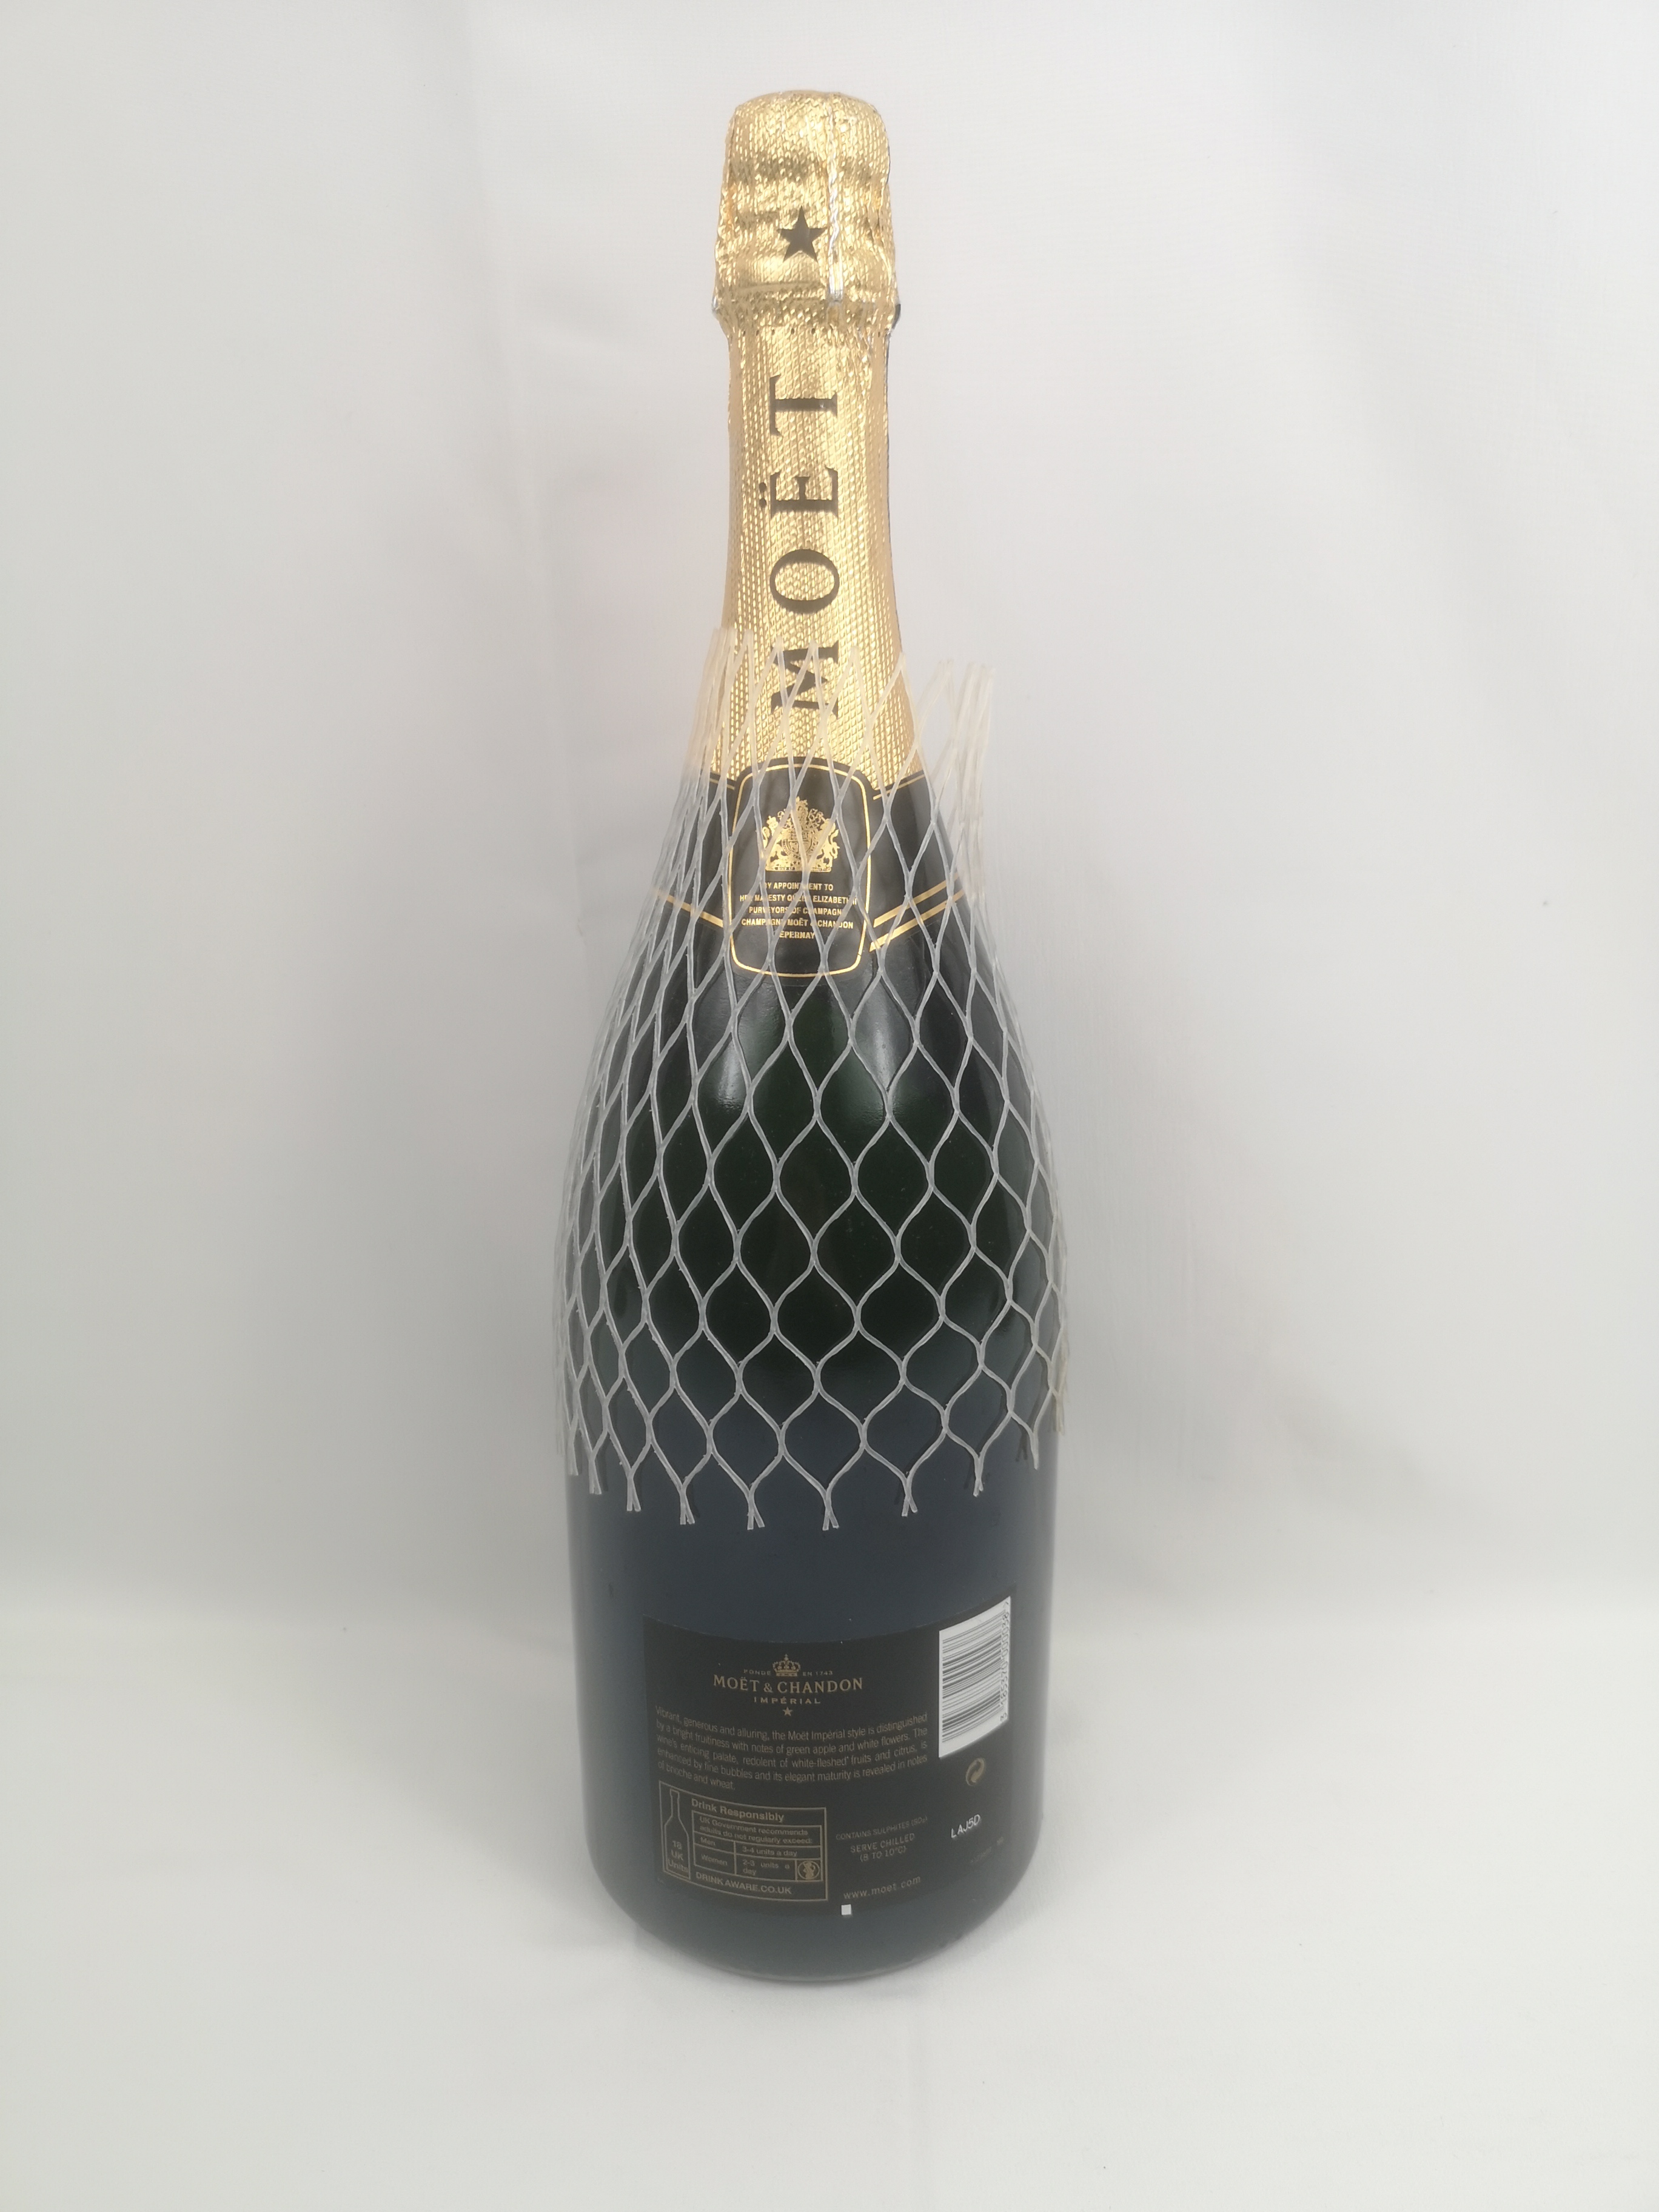 Magnum of Moet & Chandon champagne - Image 4 of 5